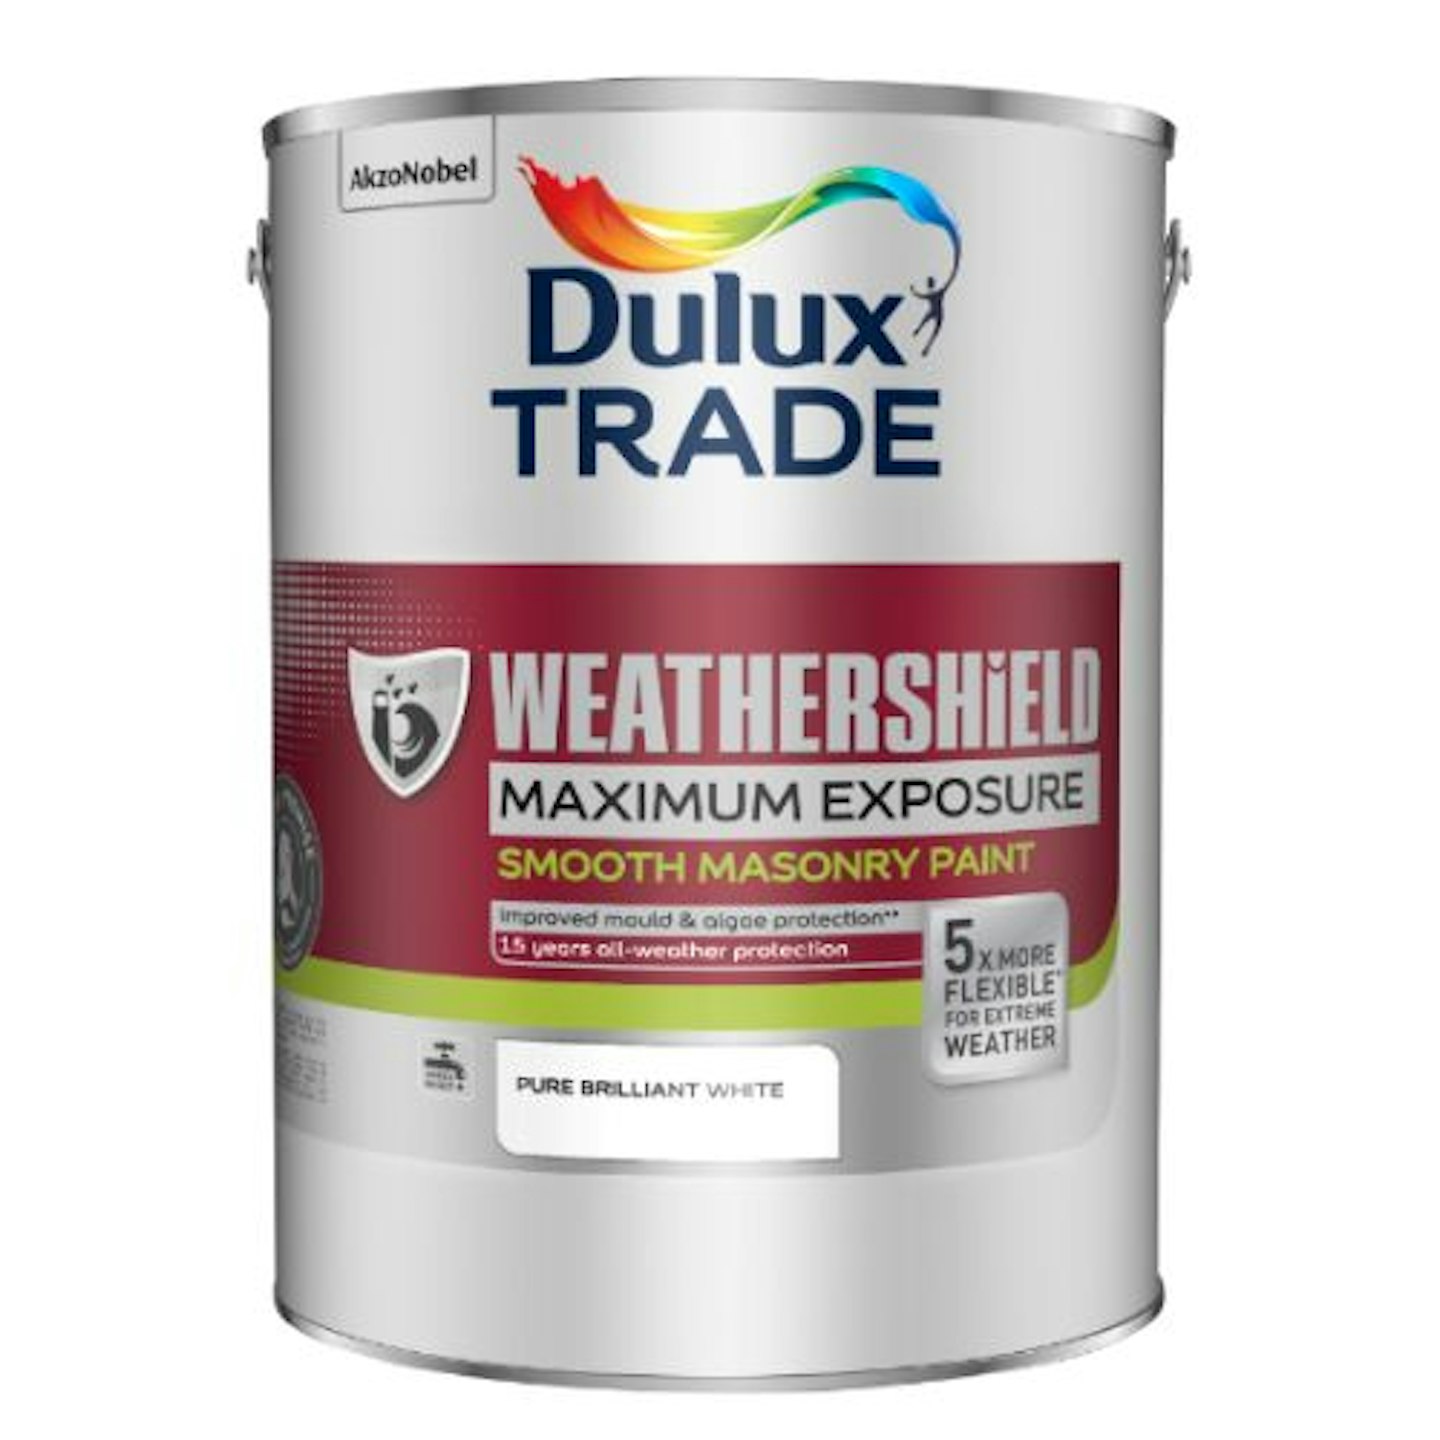 Dulux Trade Weathershield Maximum Exposure Smooth Masonry Paint, 5L